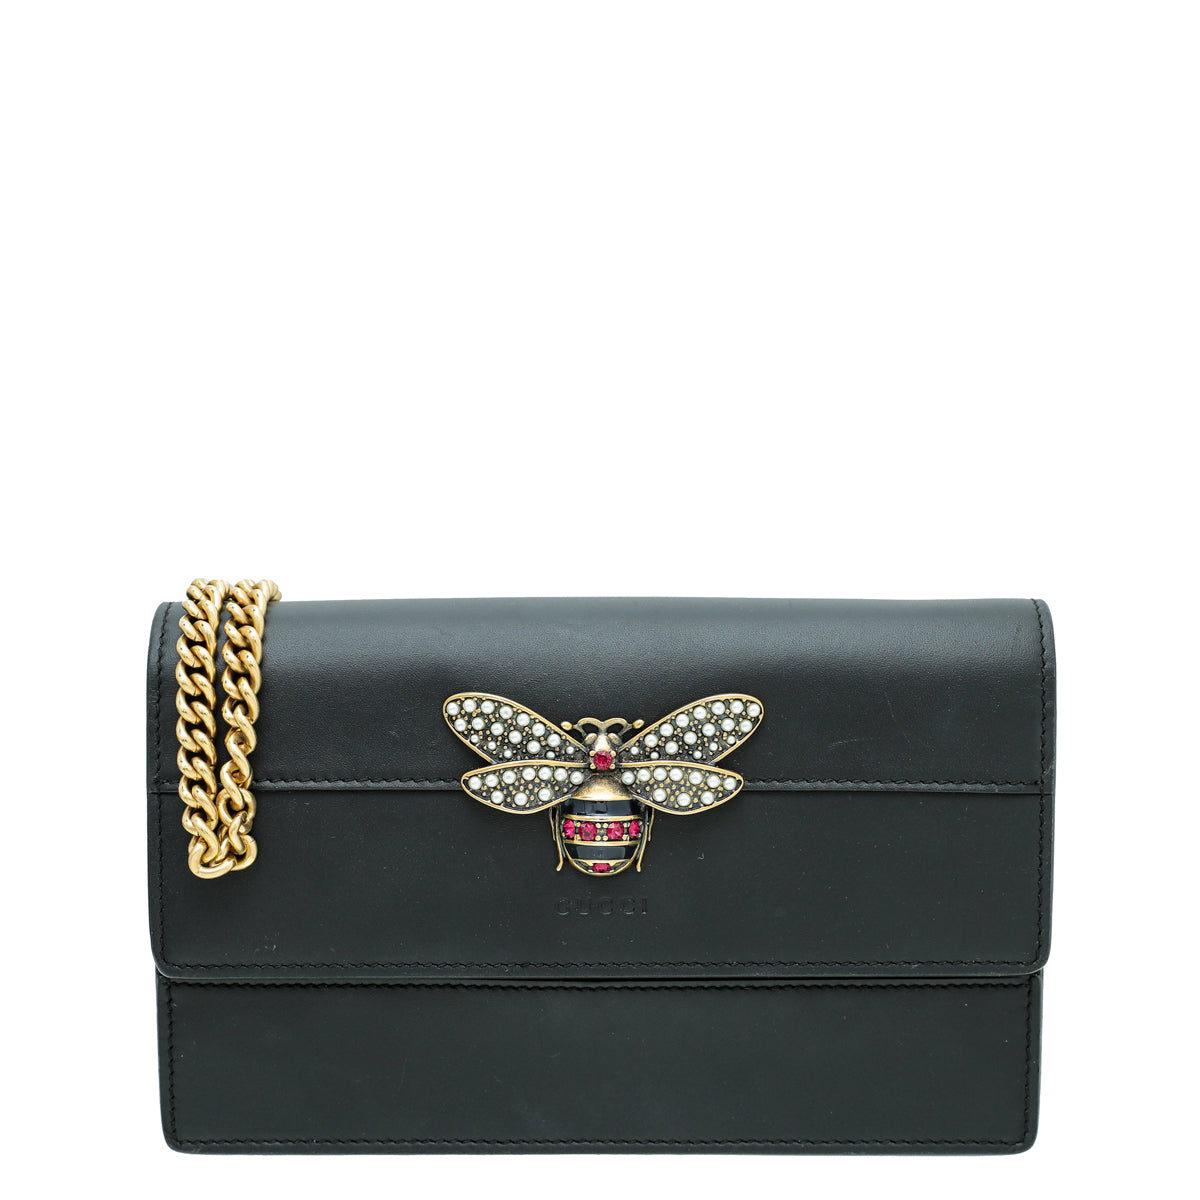 Opinions on this Gucci Bag ? : r/handbags